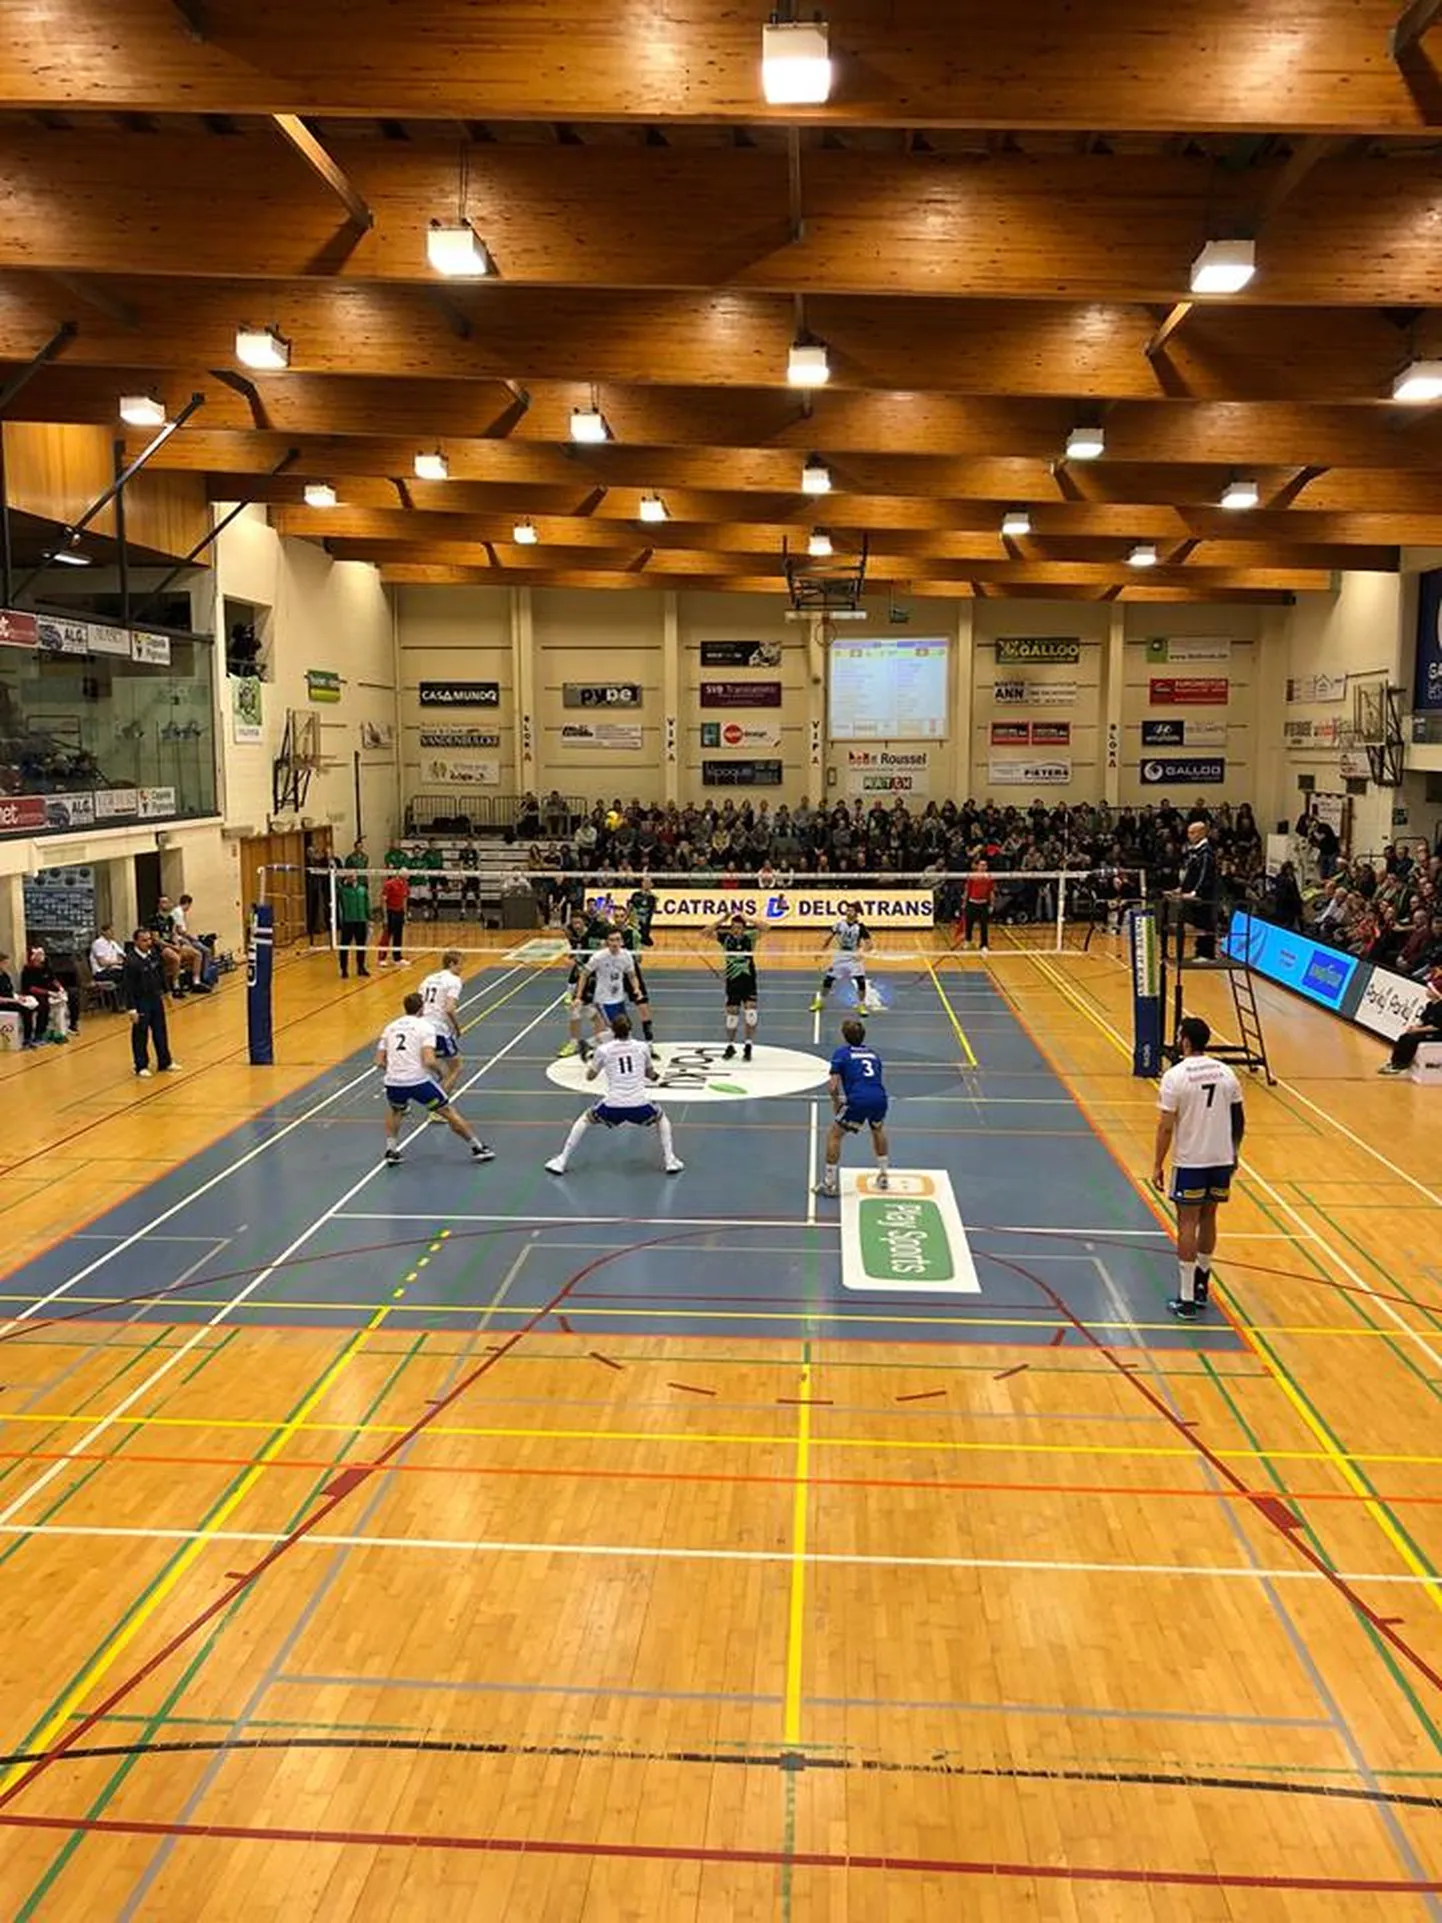 Fotojäädvustus mängust Meneni ja Volley Schönenwerdi vahel.